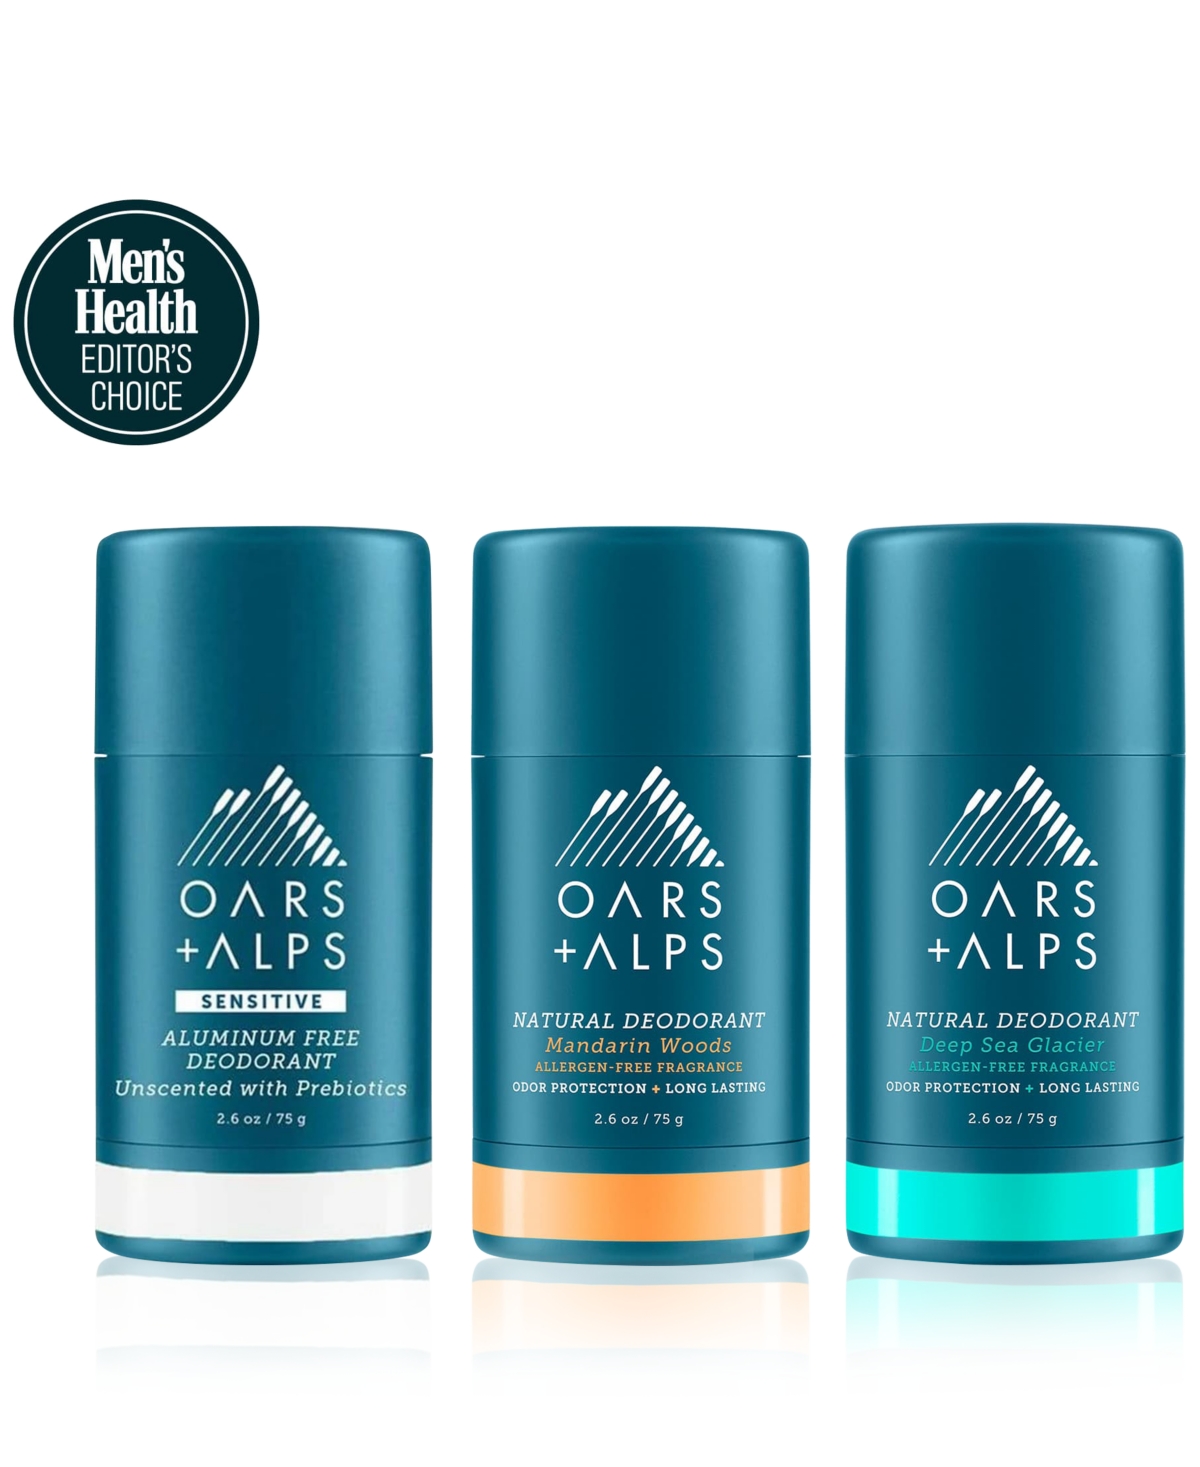 Oars + Alps 3-pc. Aluminum Free Deodorant For Sensitive Skin Set